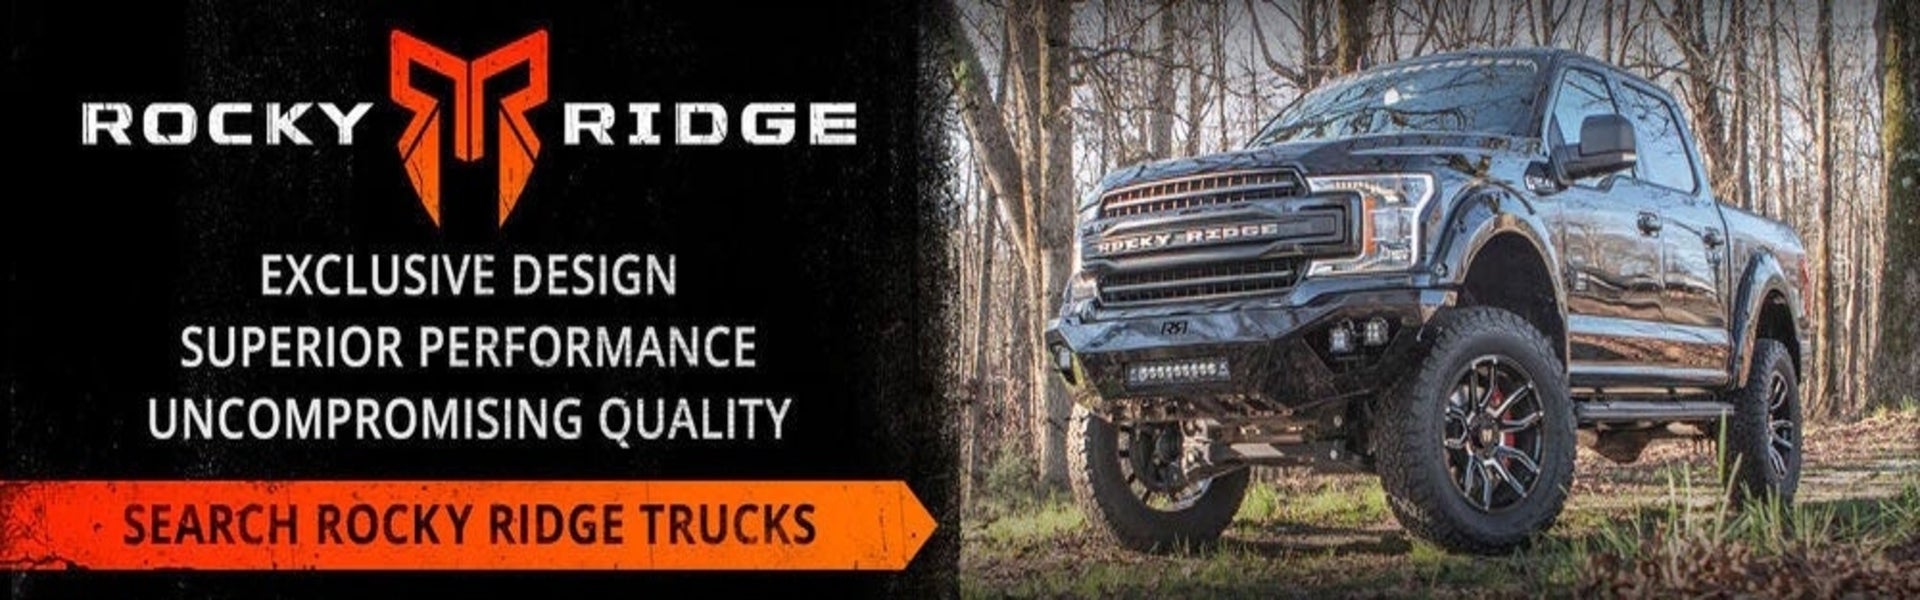 Search Rocky Ridge Trucks